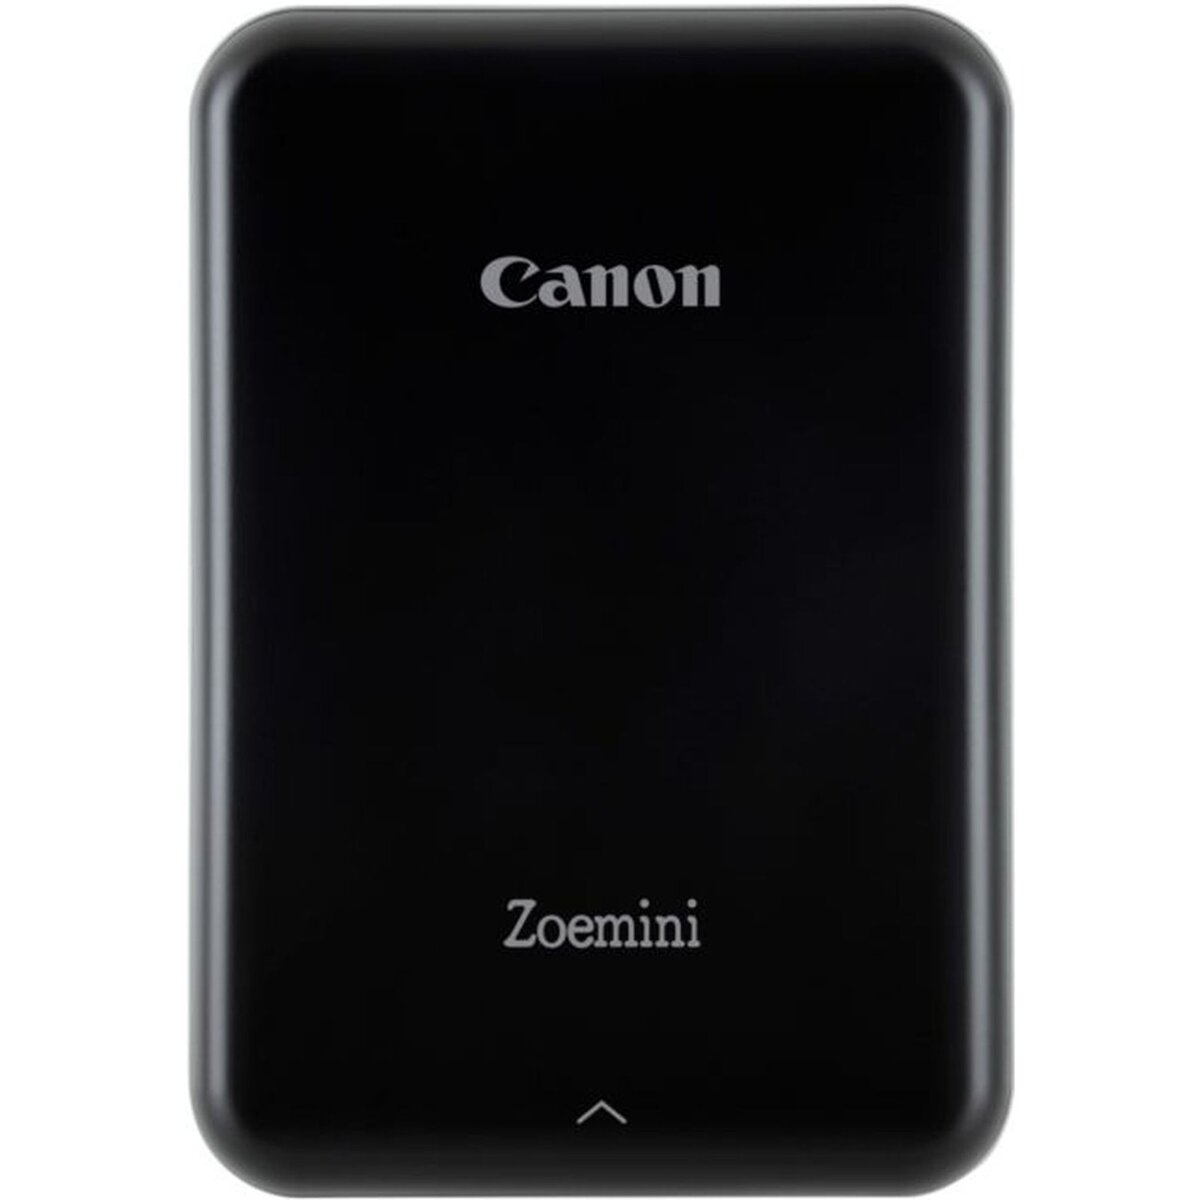 CANON Imprimante photo portable Zoemini Noir